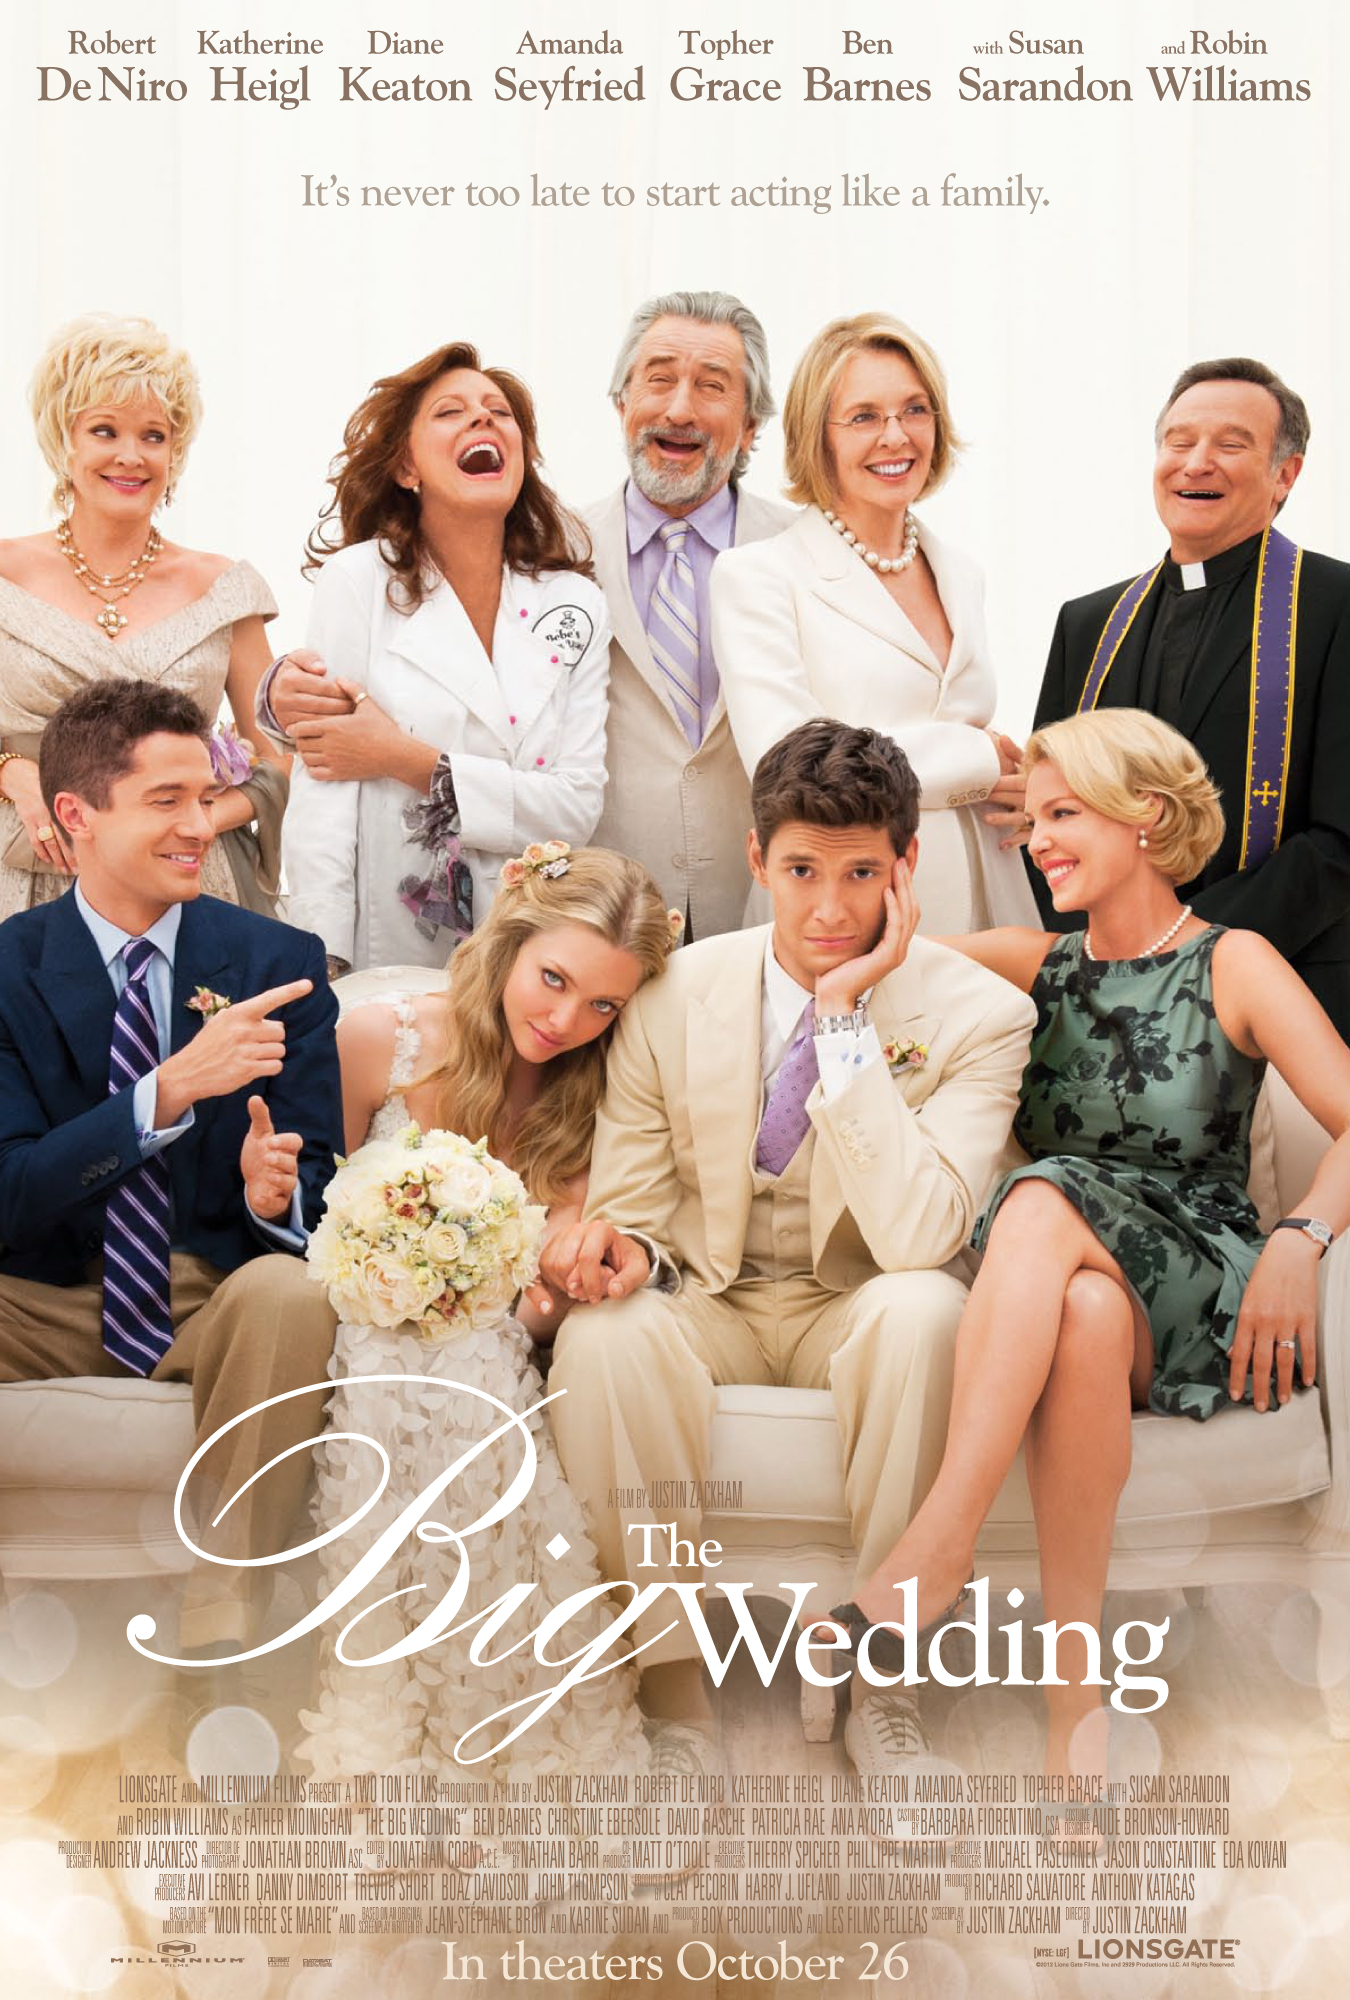 Amanda Seyfried in The Big Wedding